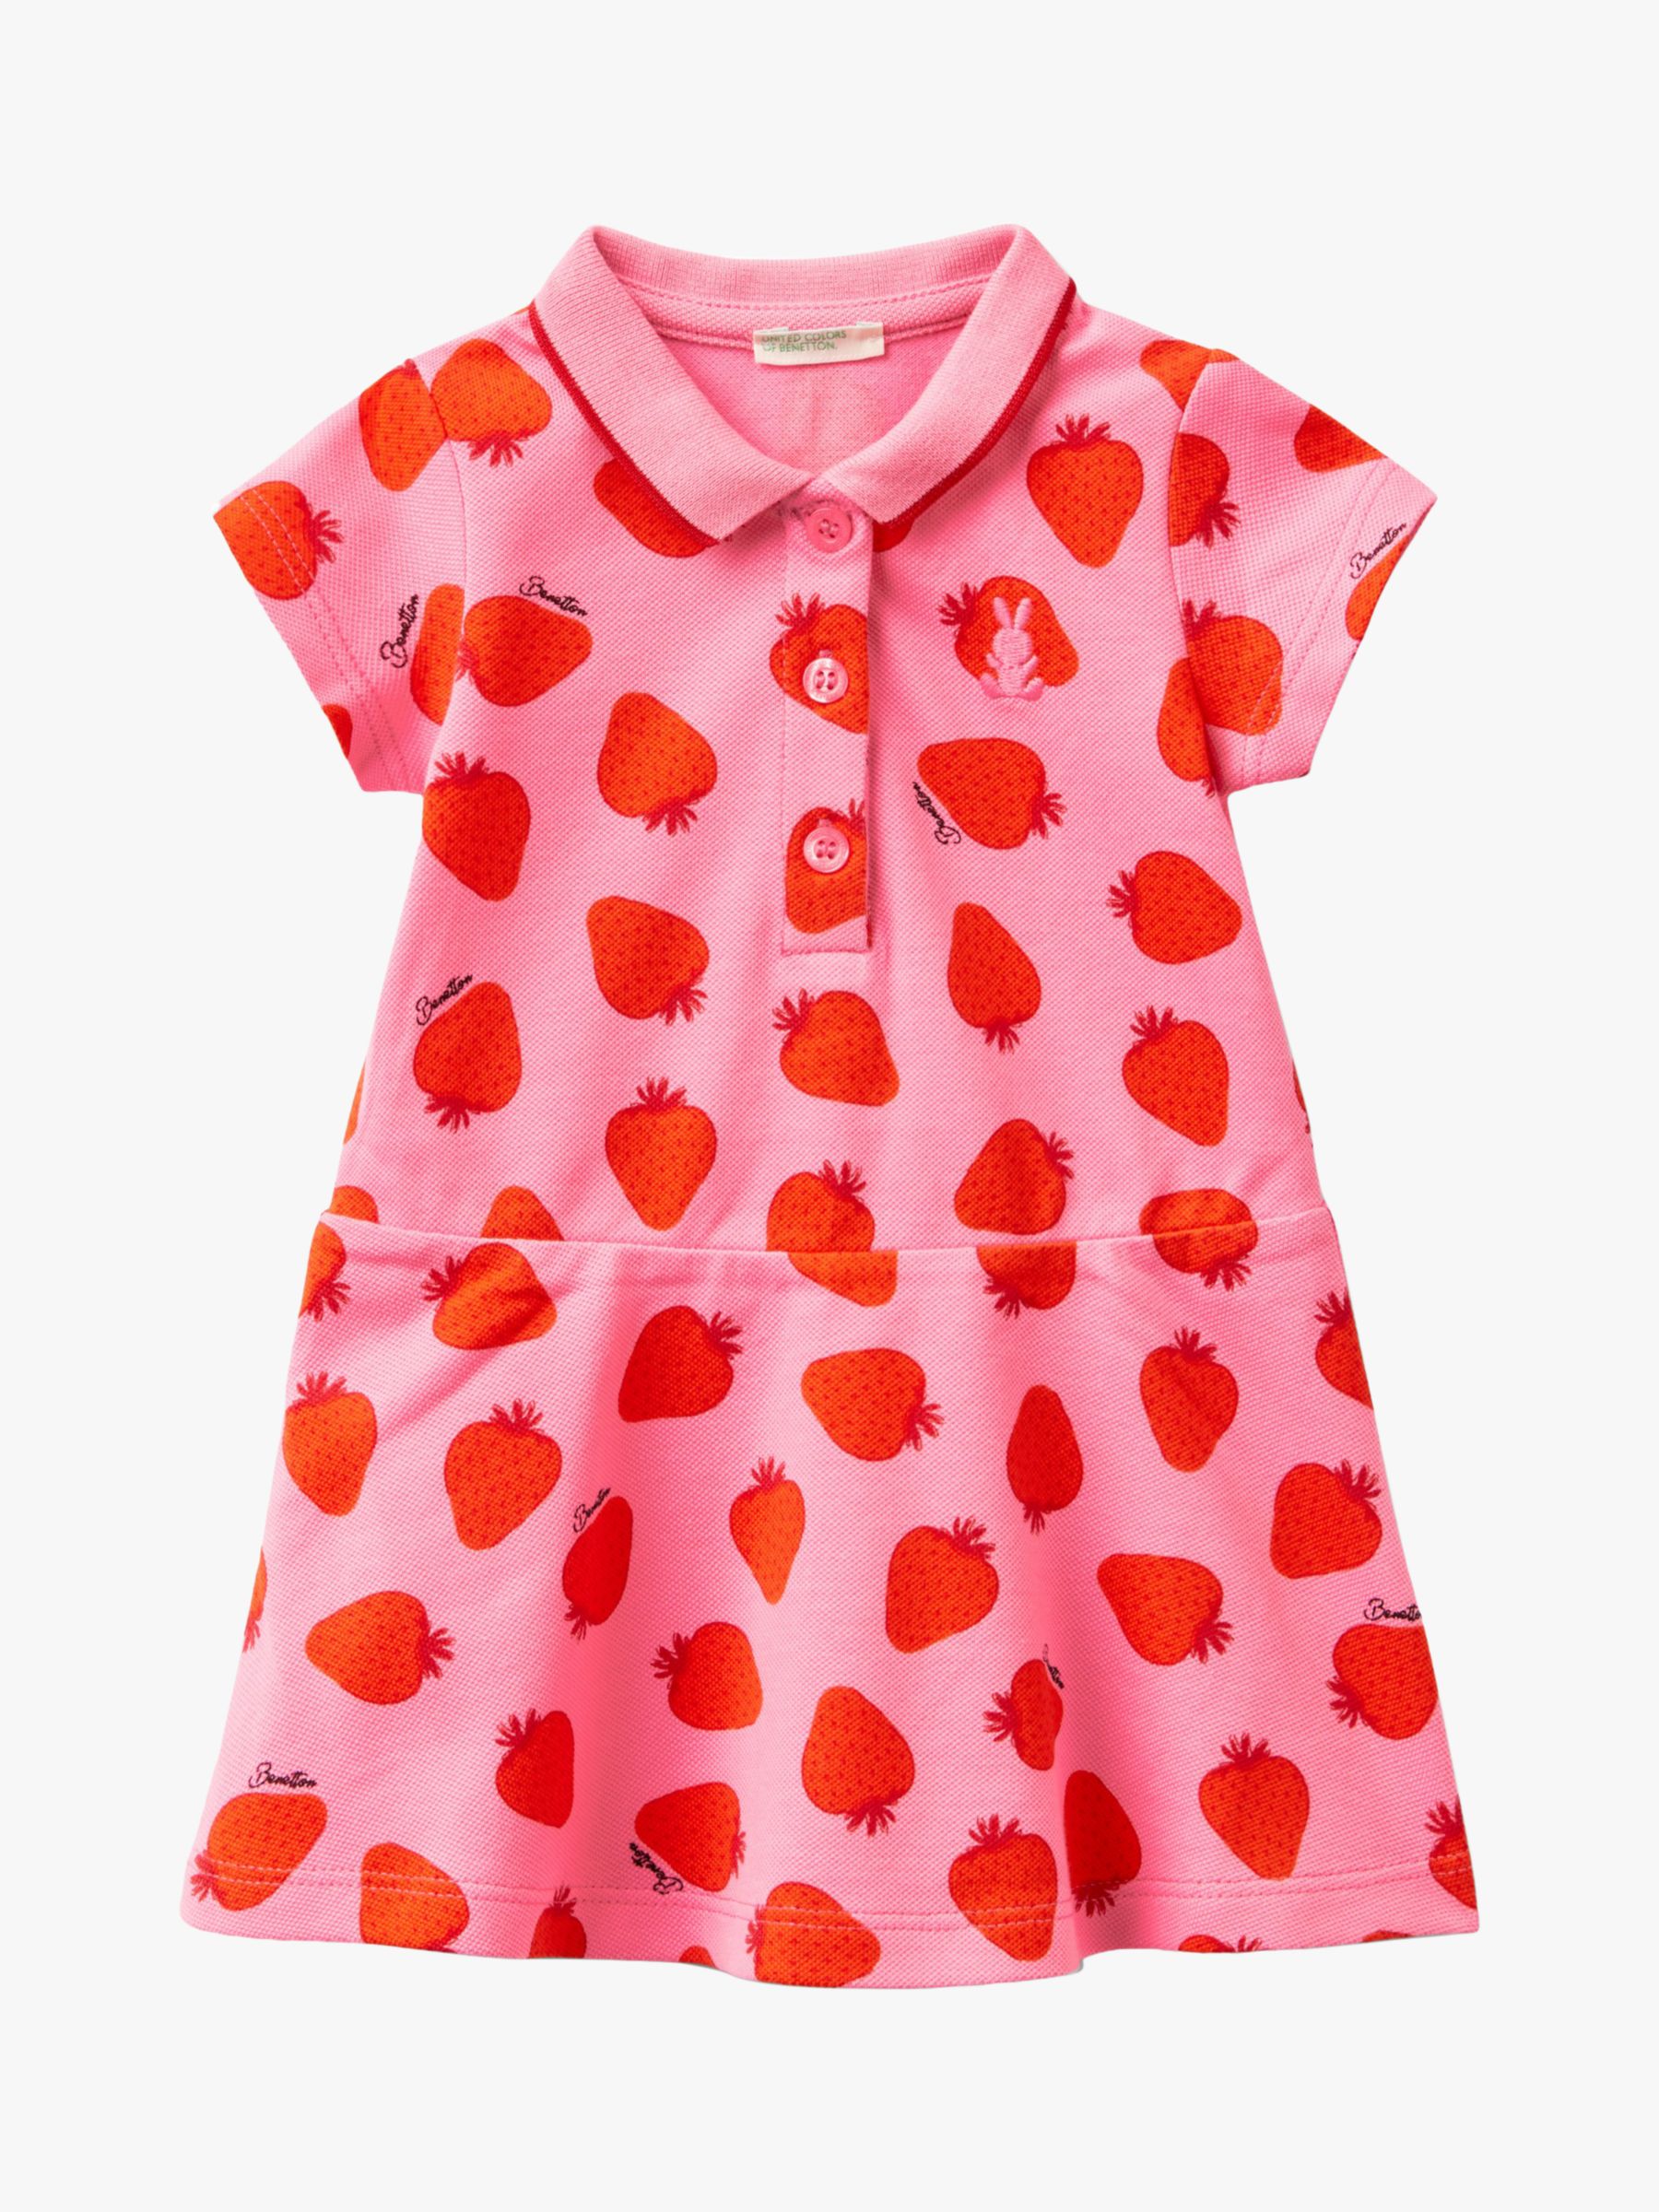 Benetton Baby Strawberry Print Dress, Pink/Multi, 0-3 months